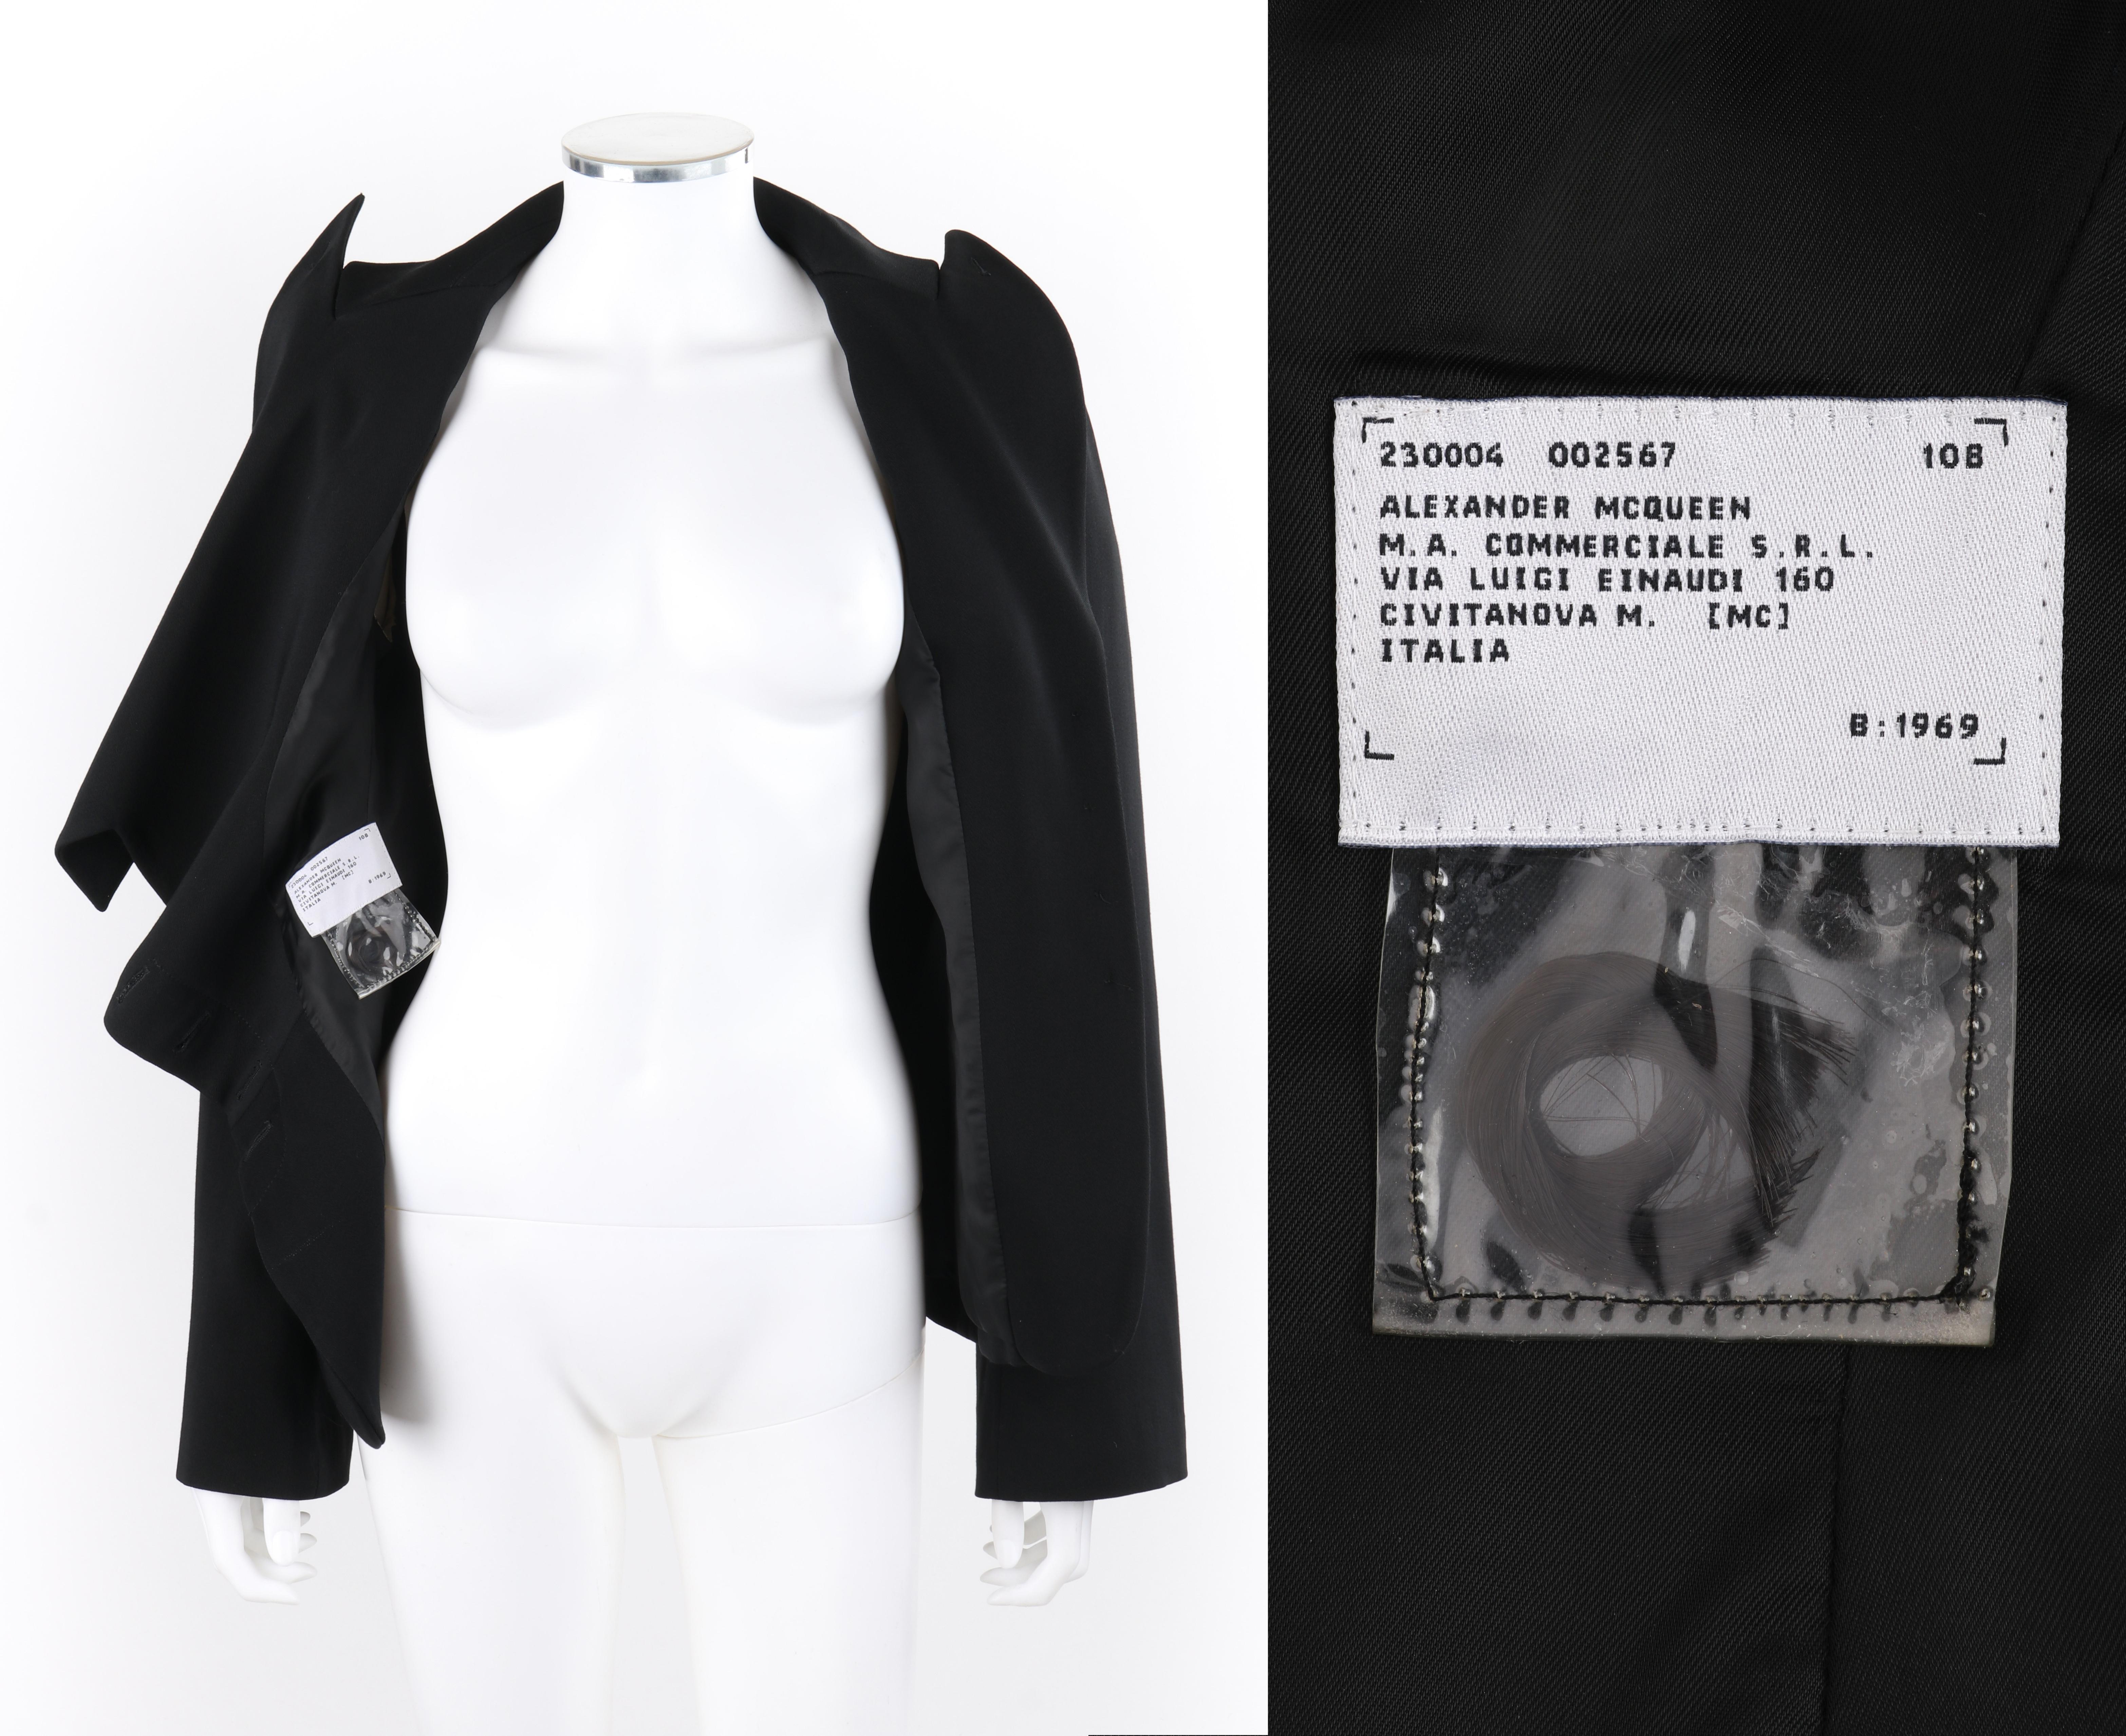 ALEXANDER McQUEEN A/W 1996 “Dante” Black Blazer Jacket w/ Hair + Birth Label

Brand / Manufacturer: Alexander McQueen
Collection: A/W 1996 “Dante”- Runway look #71
Designer: Alexander McQueen
Style: Asymmetric blazer jacket
Color(s): Black
Lined: